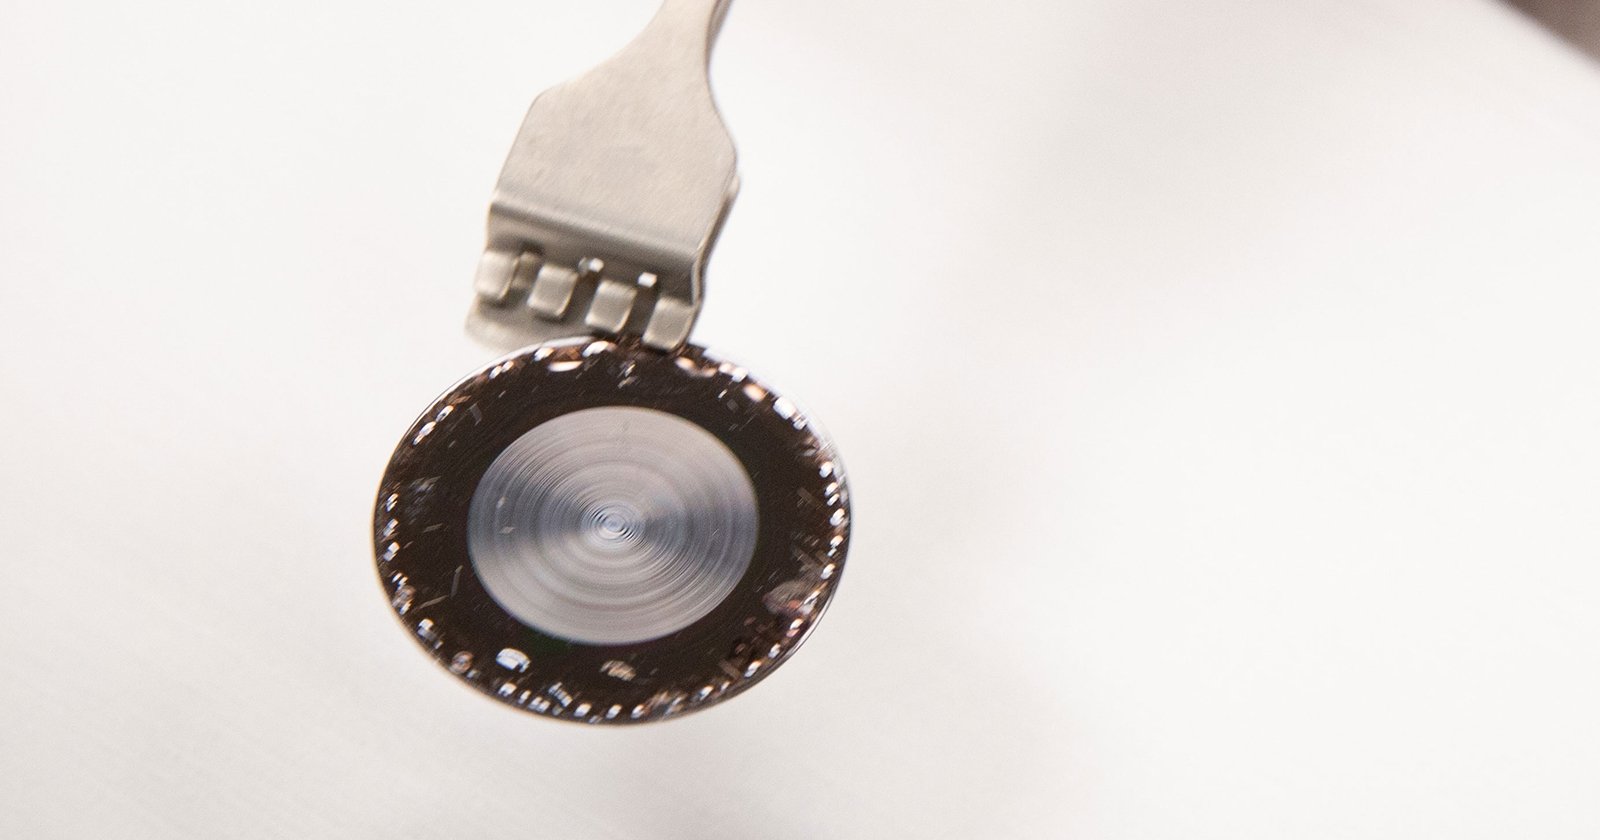  researchers developed lens 1000x thinner than regular 